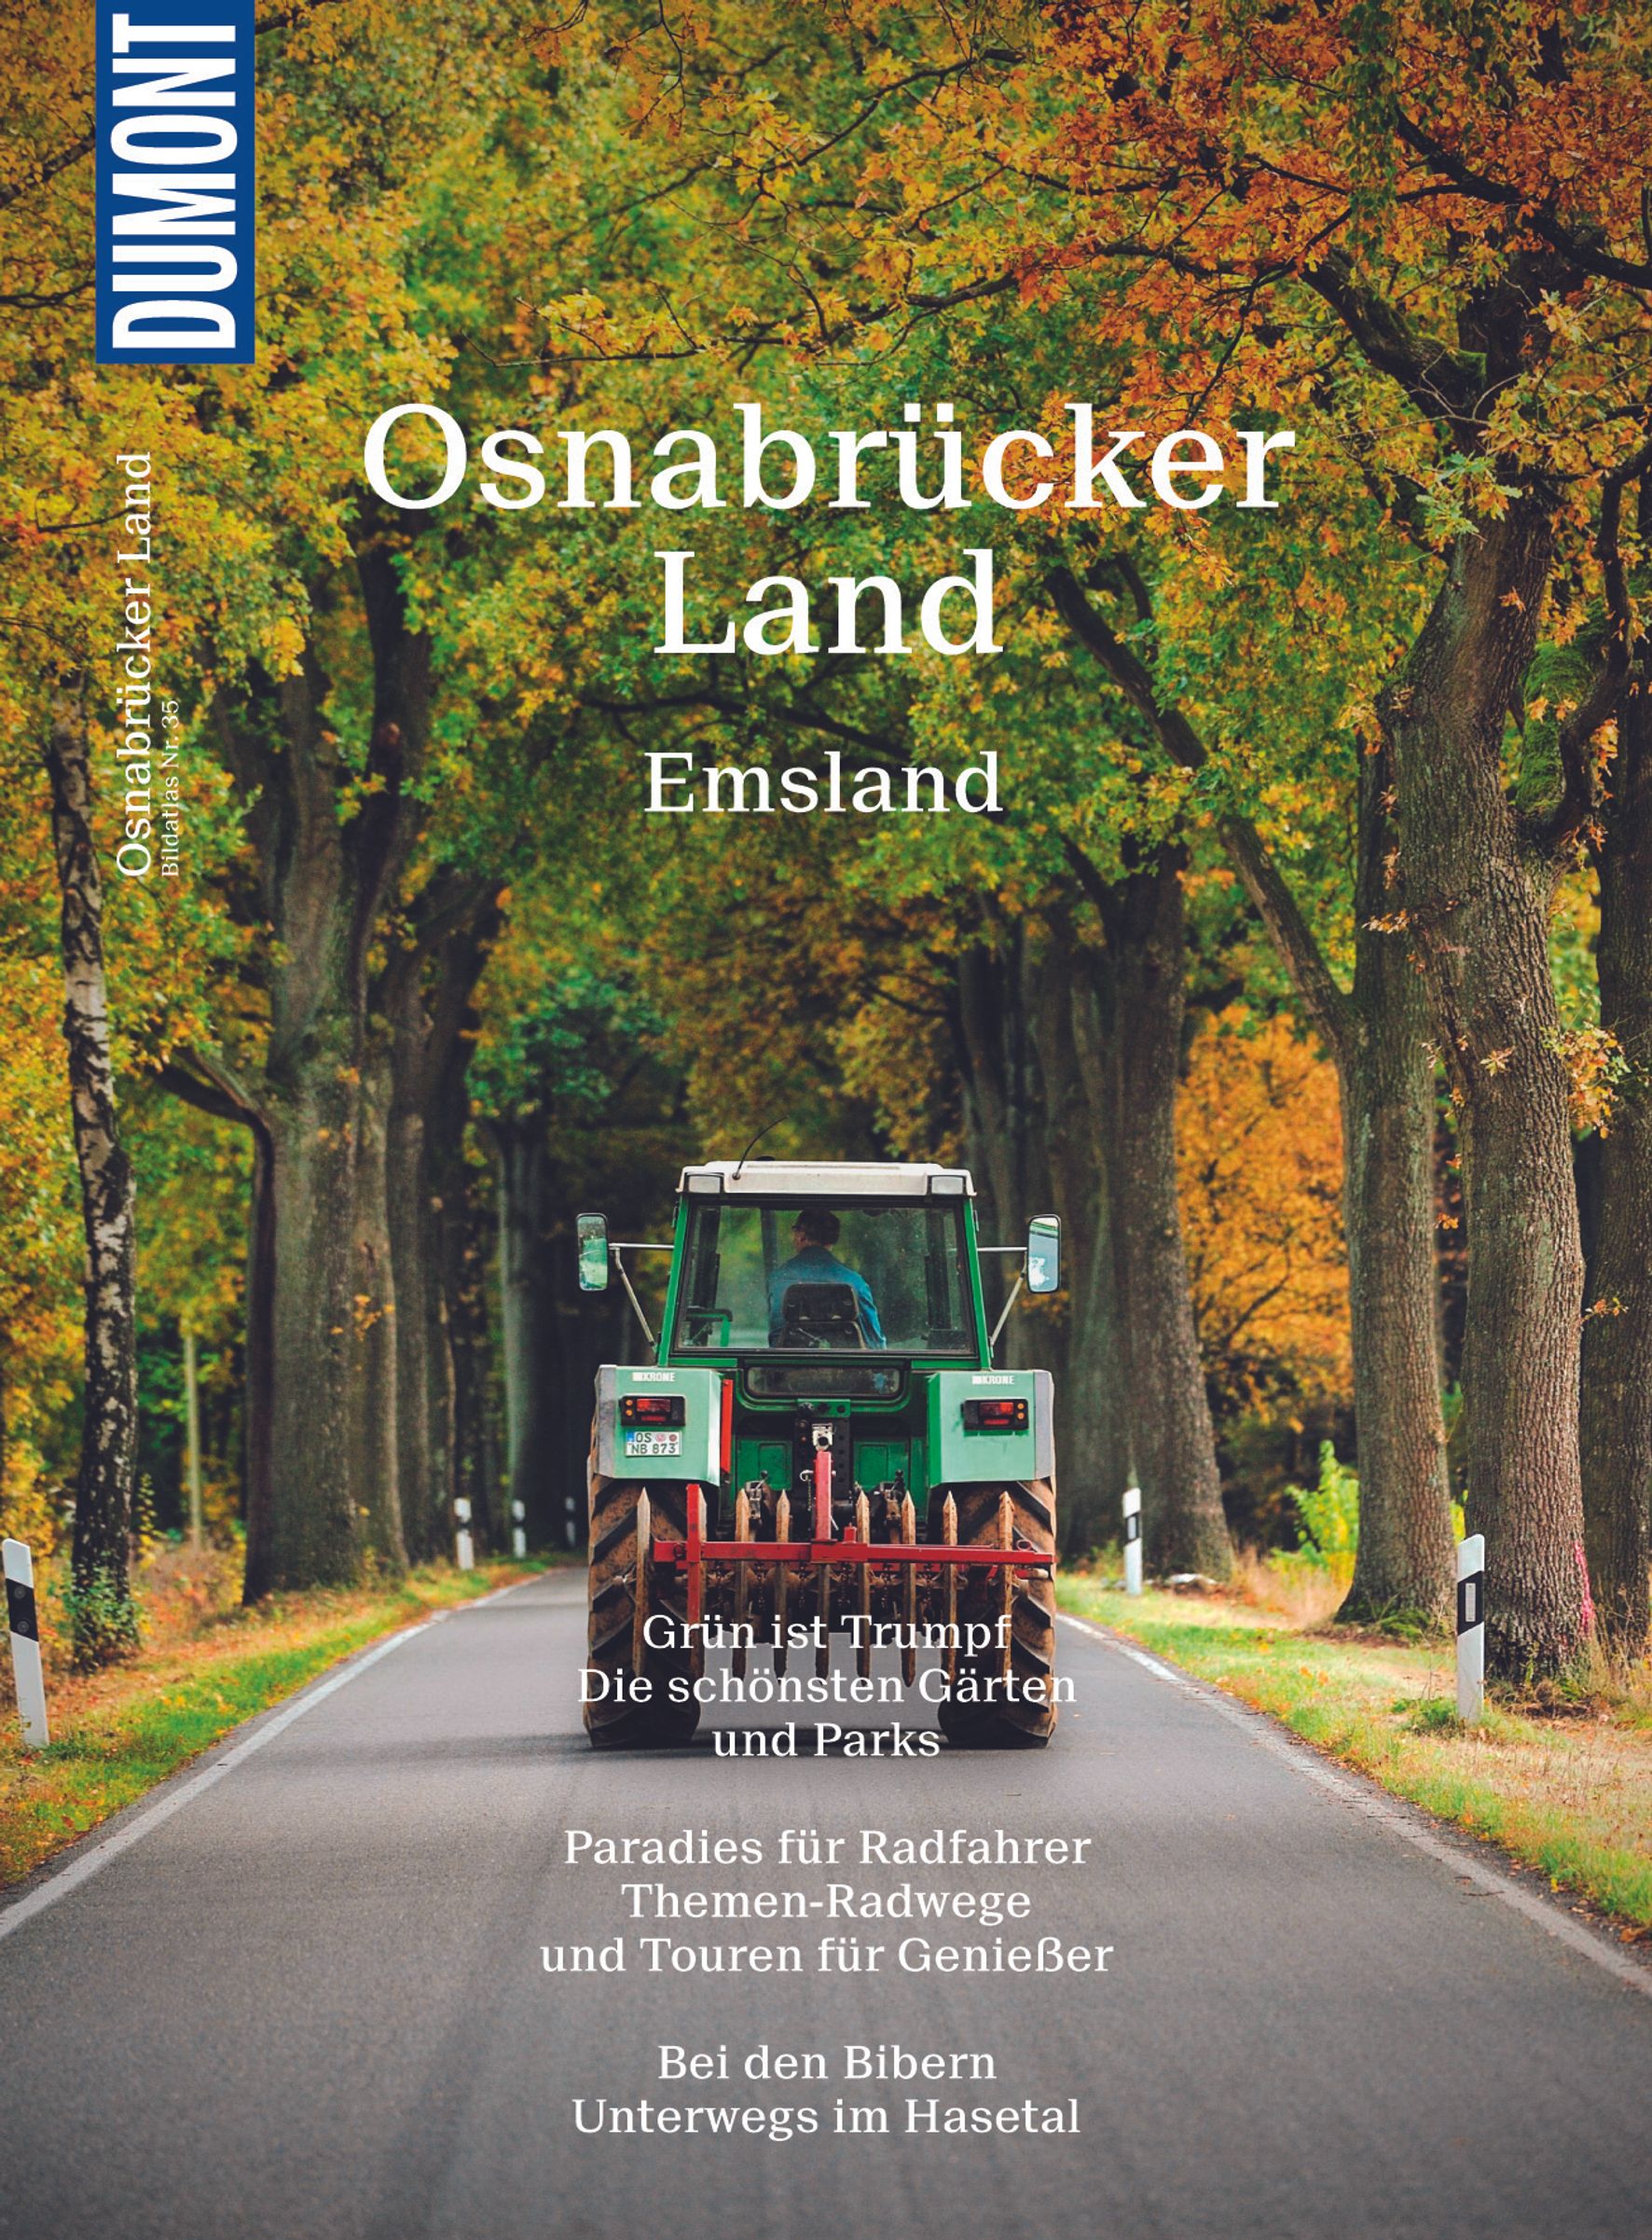 MAIRDUMONT Osnabrücker Land (eBook)